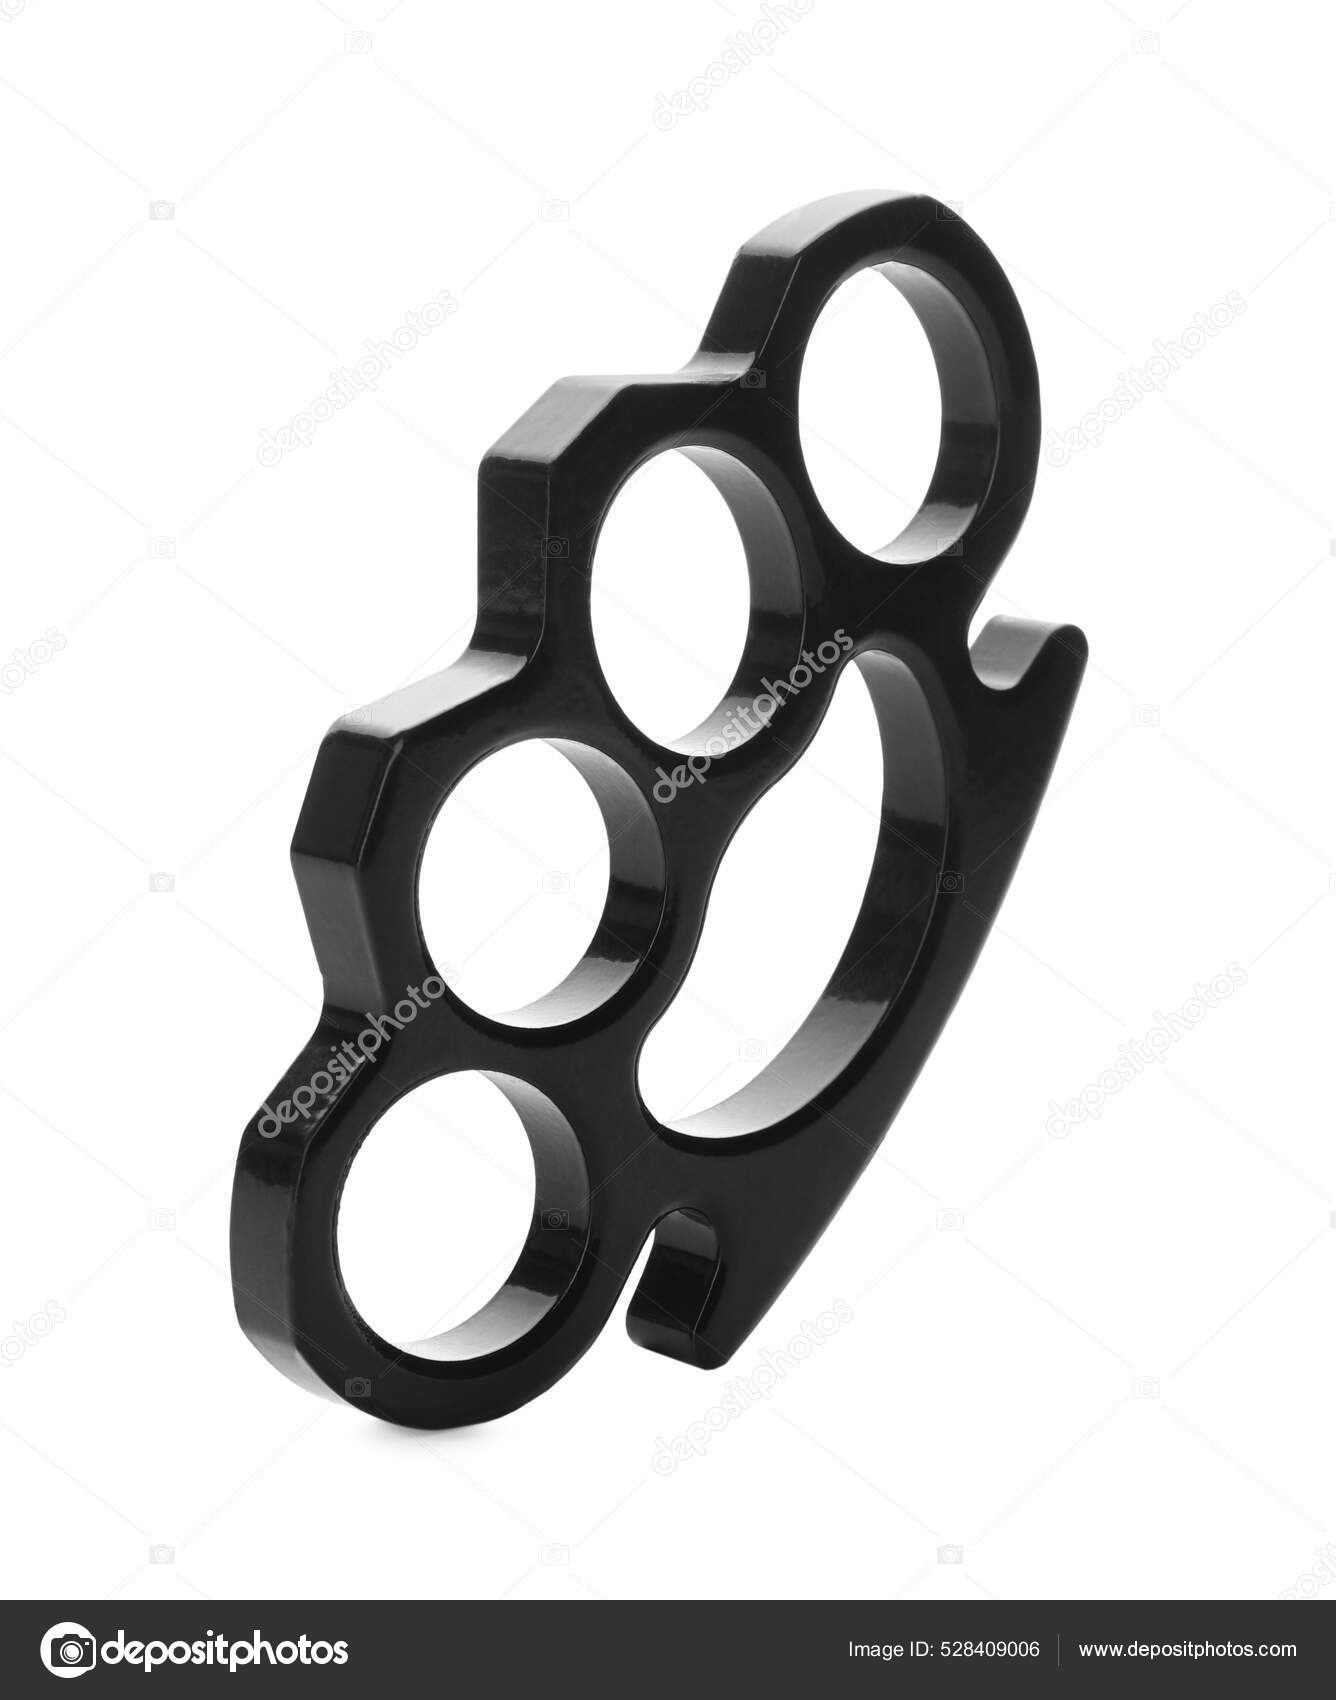 https://st.depositphotos.com/16122460/52840/i/1600/depositphotos_528409006-stock-photo-new-black-brass-knuckles-isolated.jpg